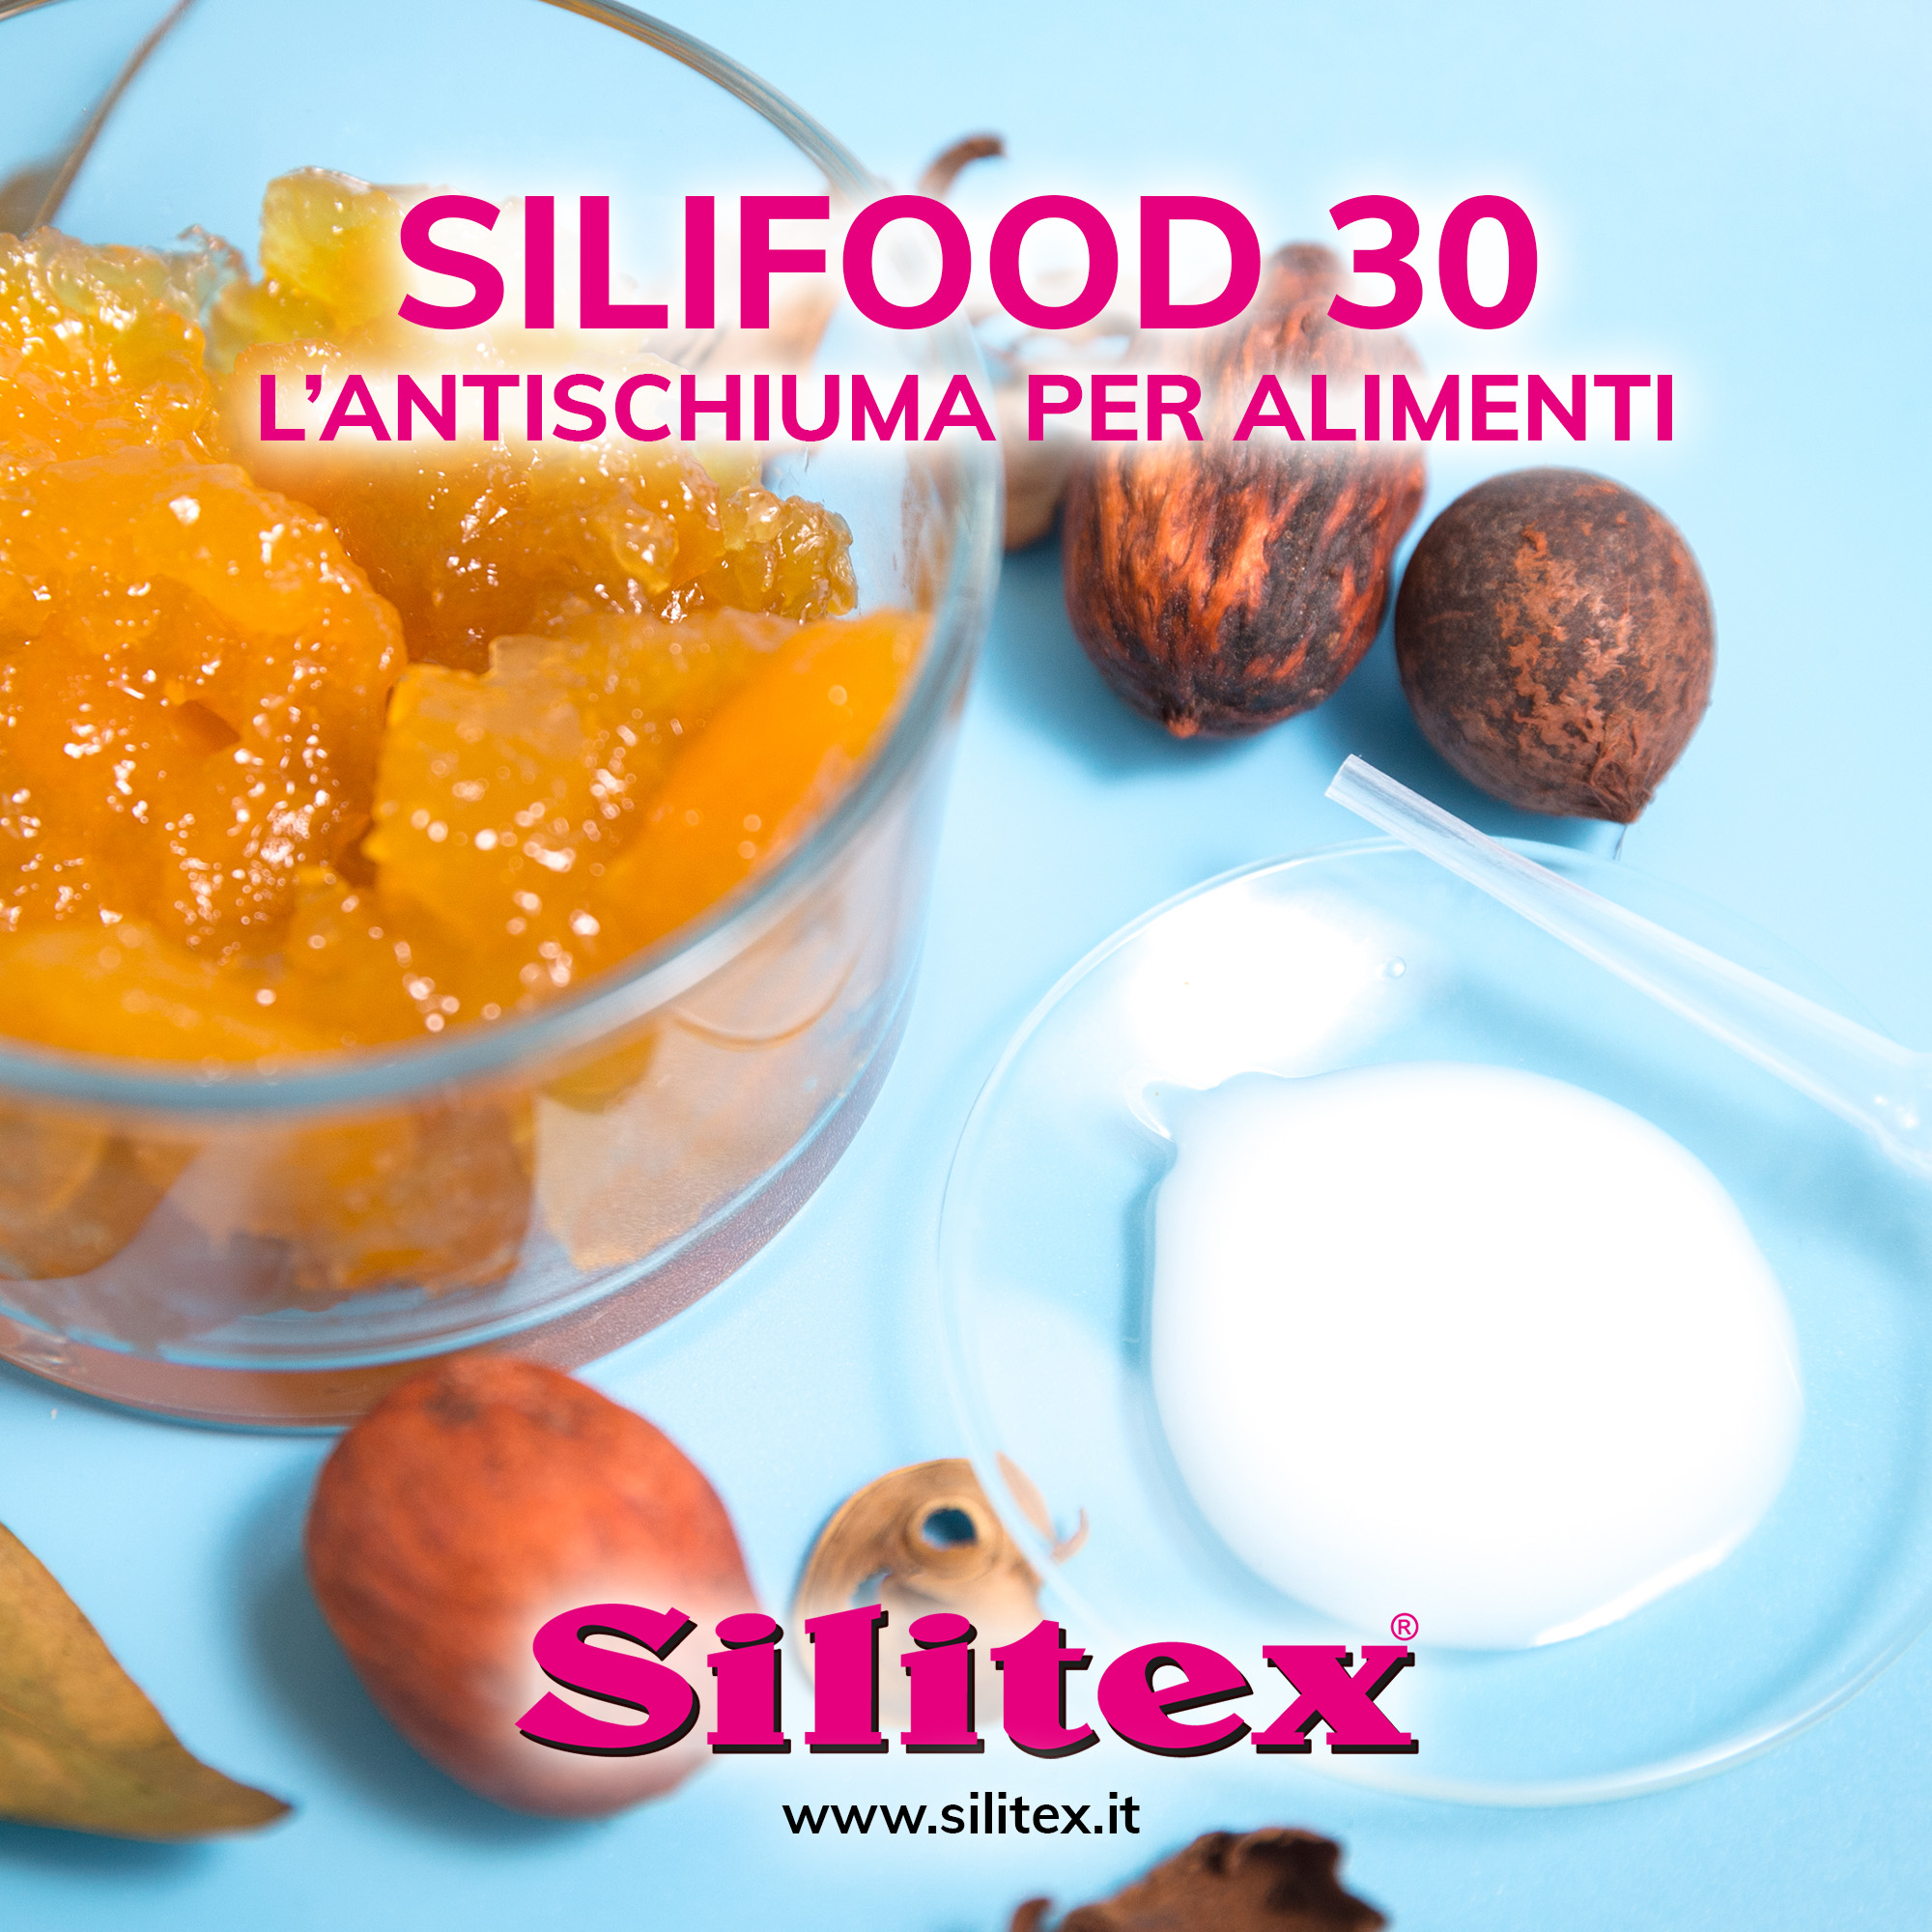 Silifood 30 antifoam for food